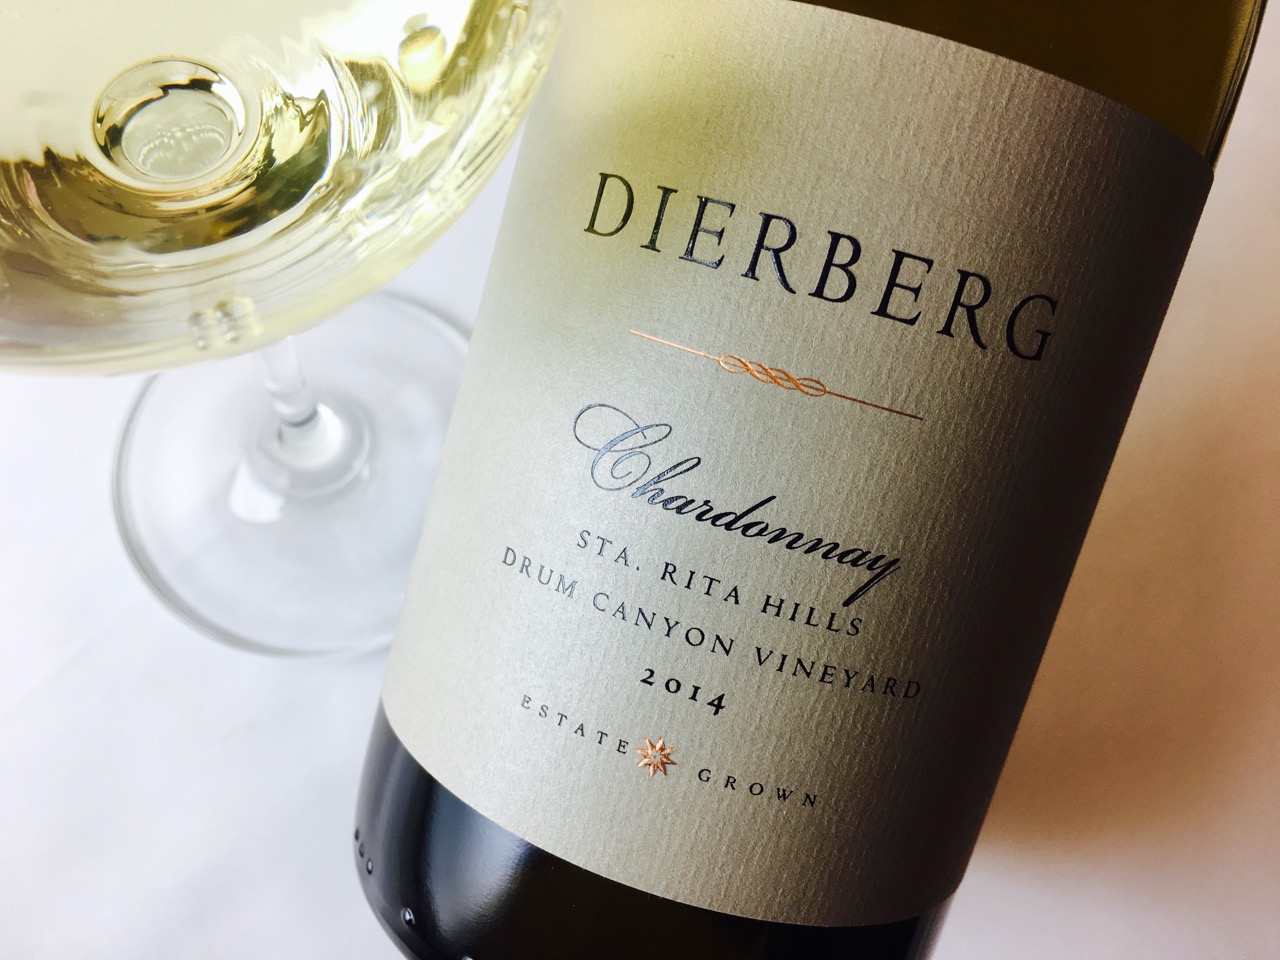 2014 Dierberg Chardonnay Drum Canyon Vineyard Sta. Rita Hills